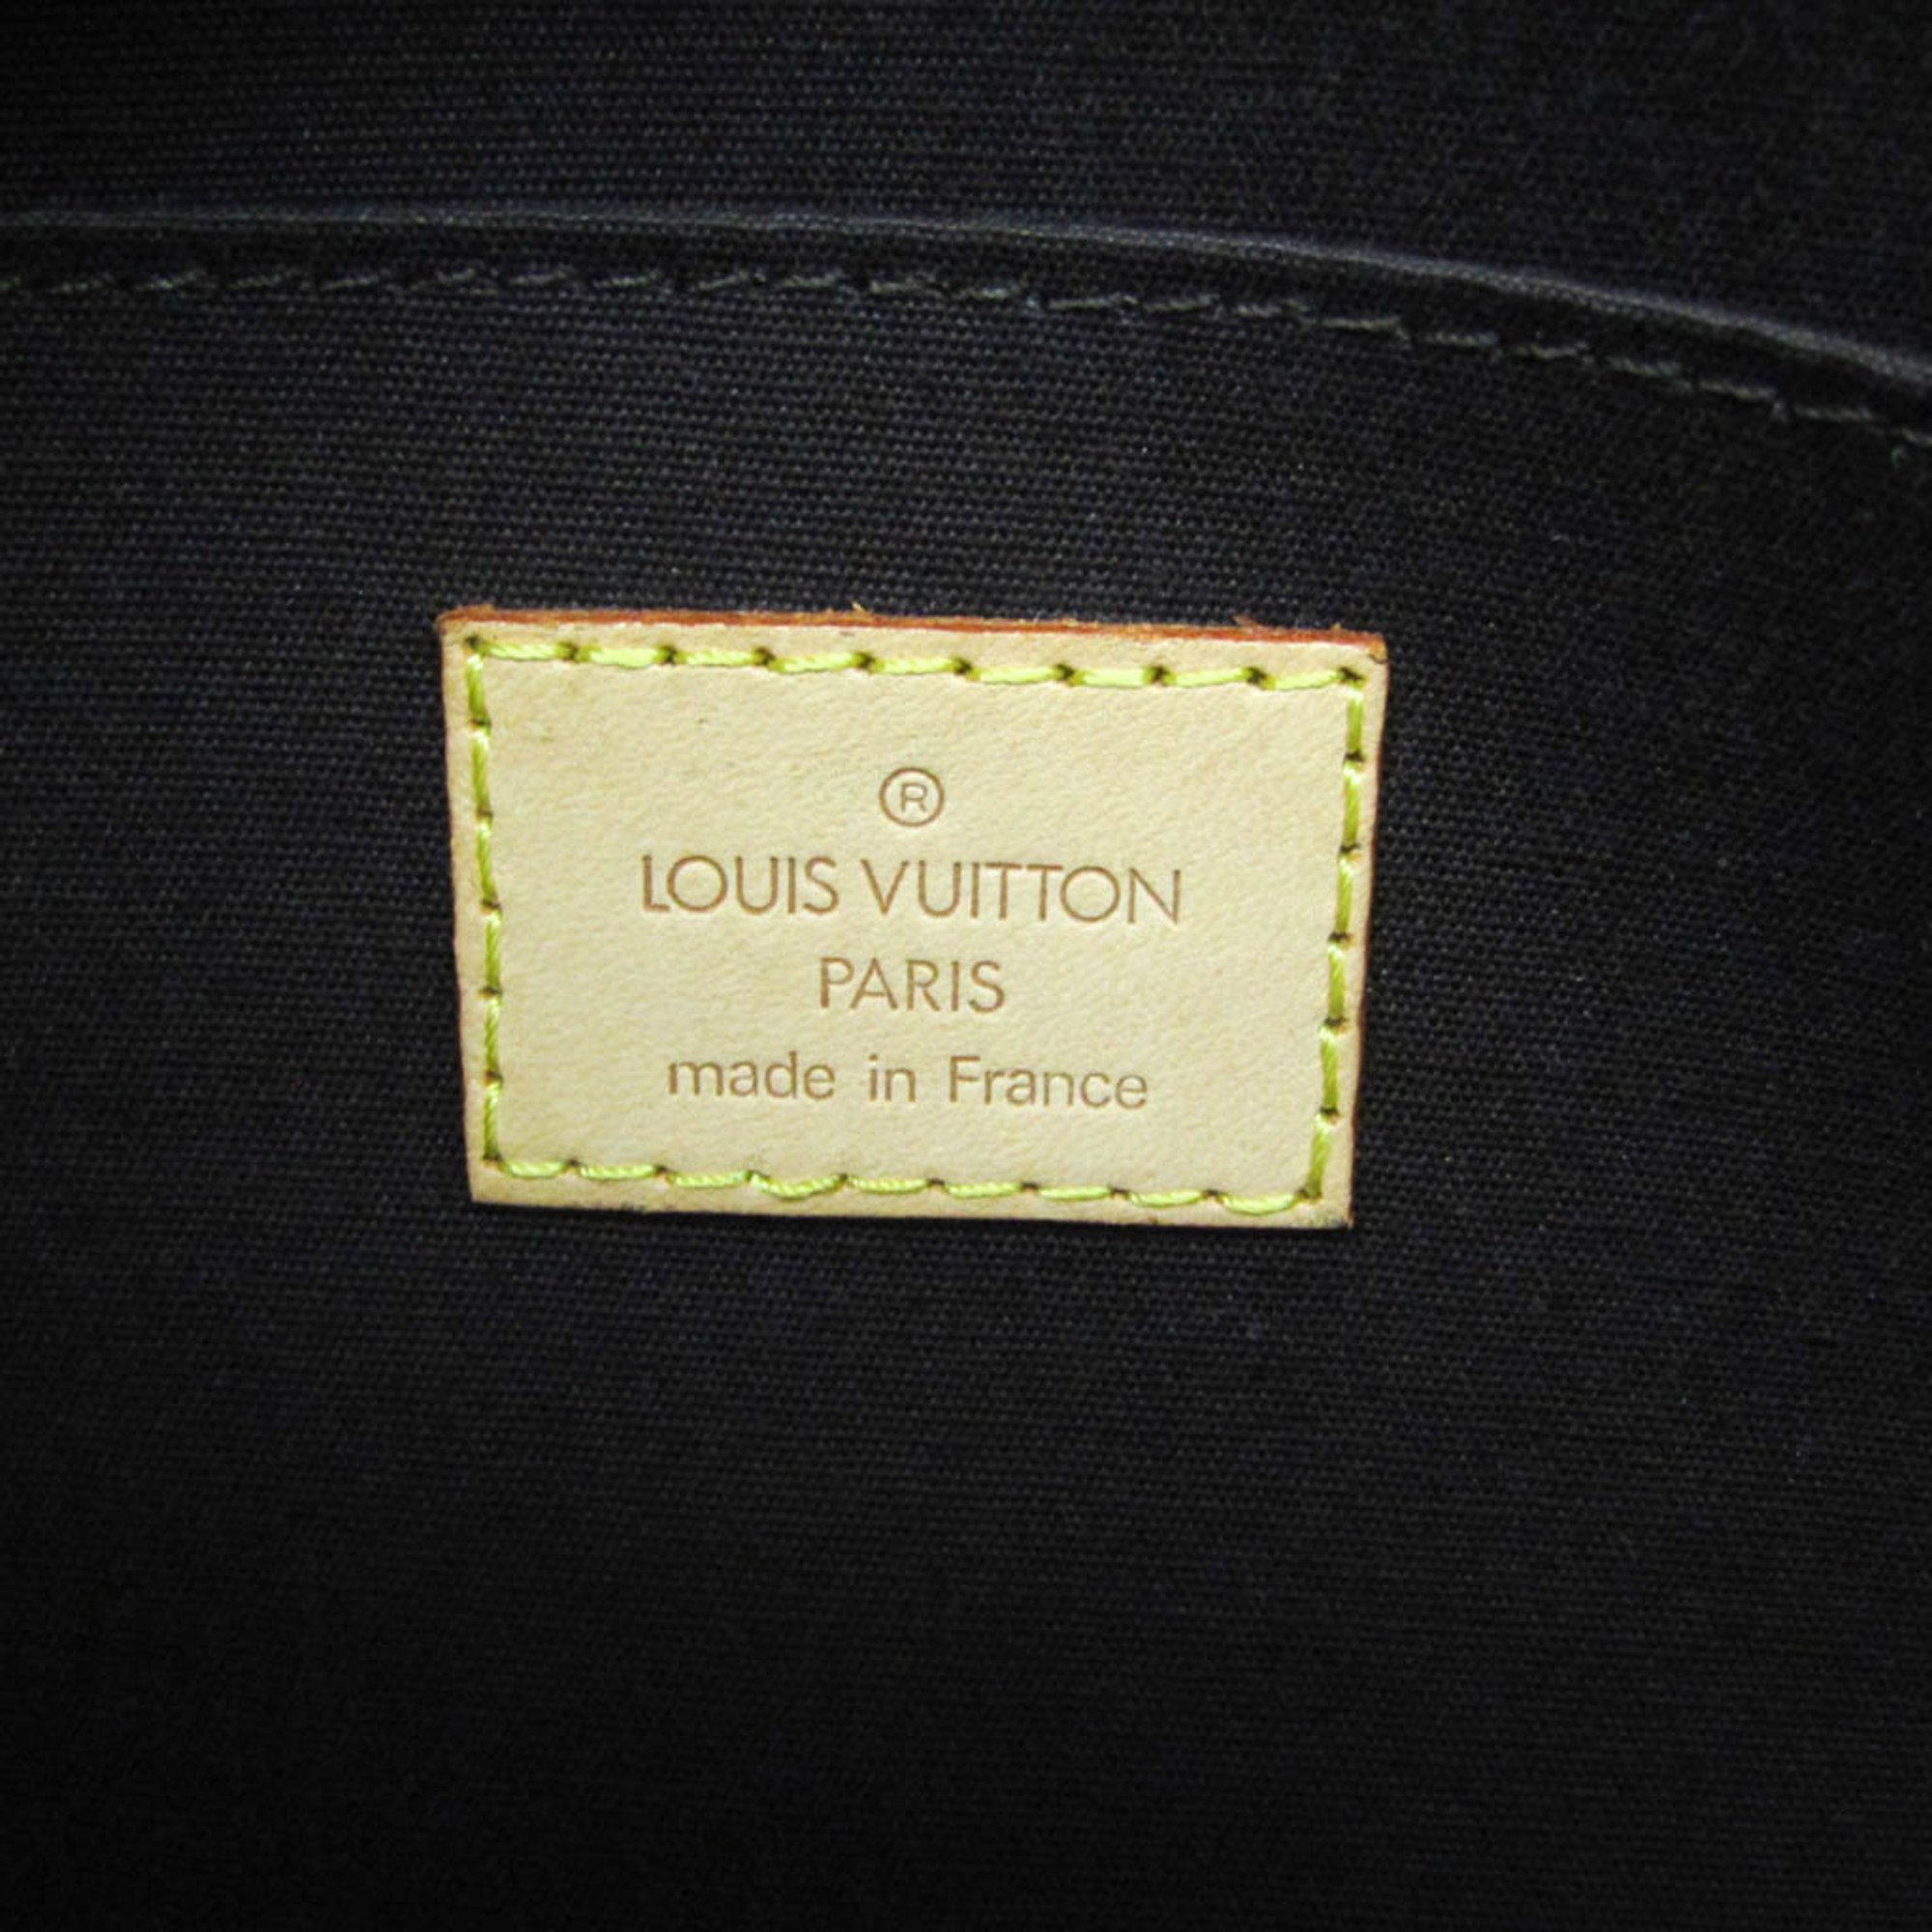 Louis Vuitton Roxbury Drive M91995 Women's Handbag,Shoulder Bag Amarante